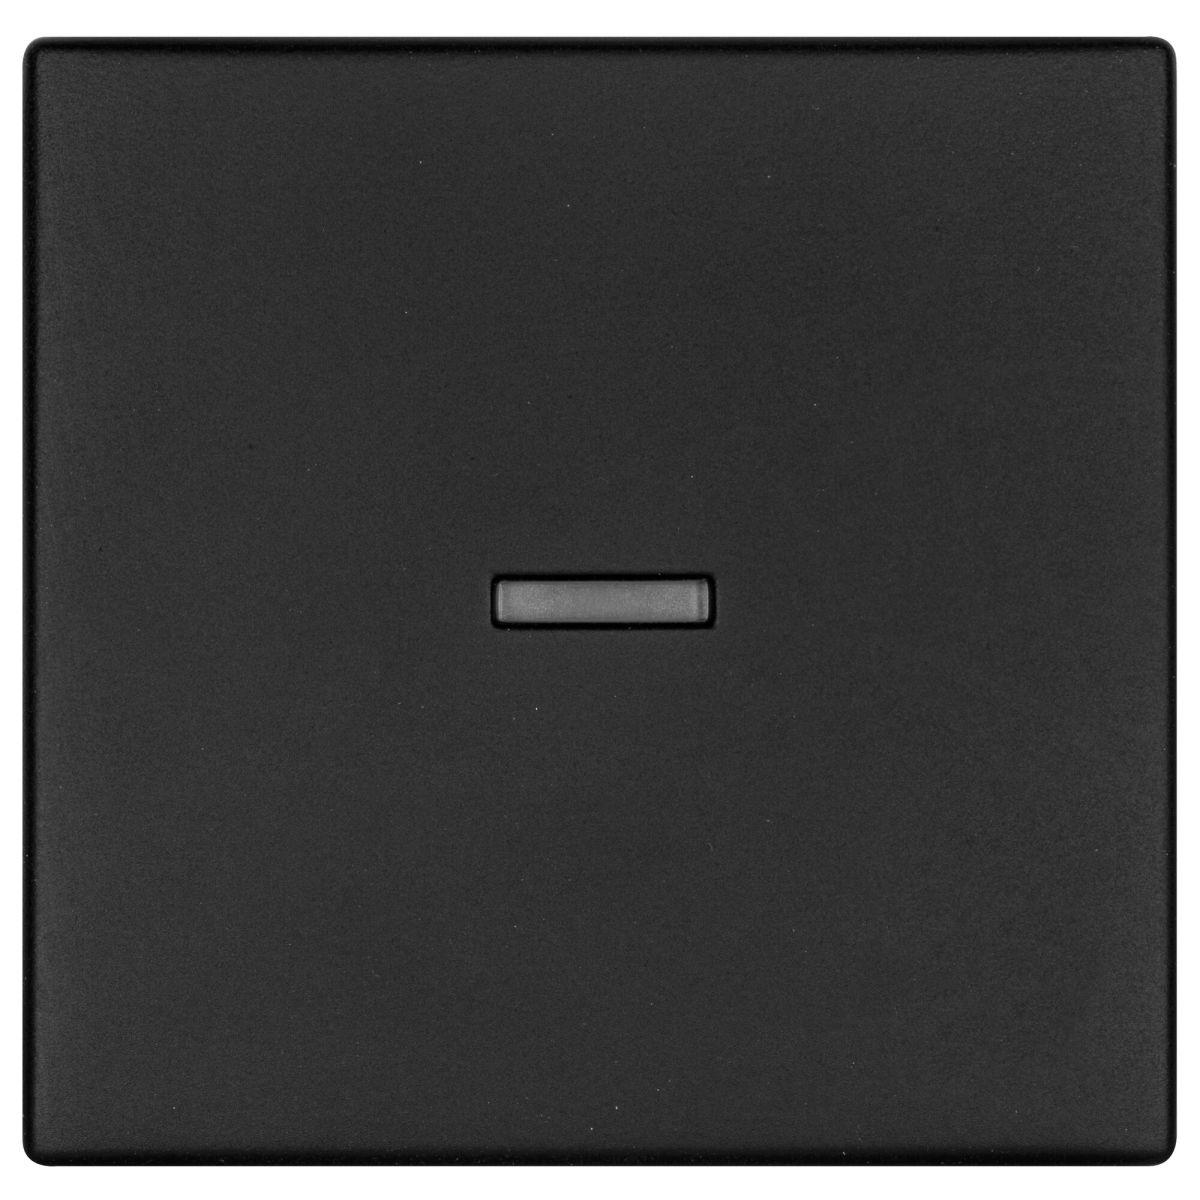 Wippe Kontroll-Schalter K55 schwarz matt